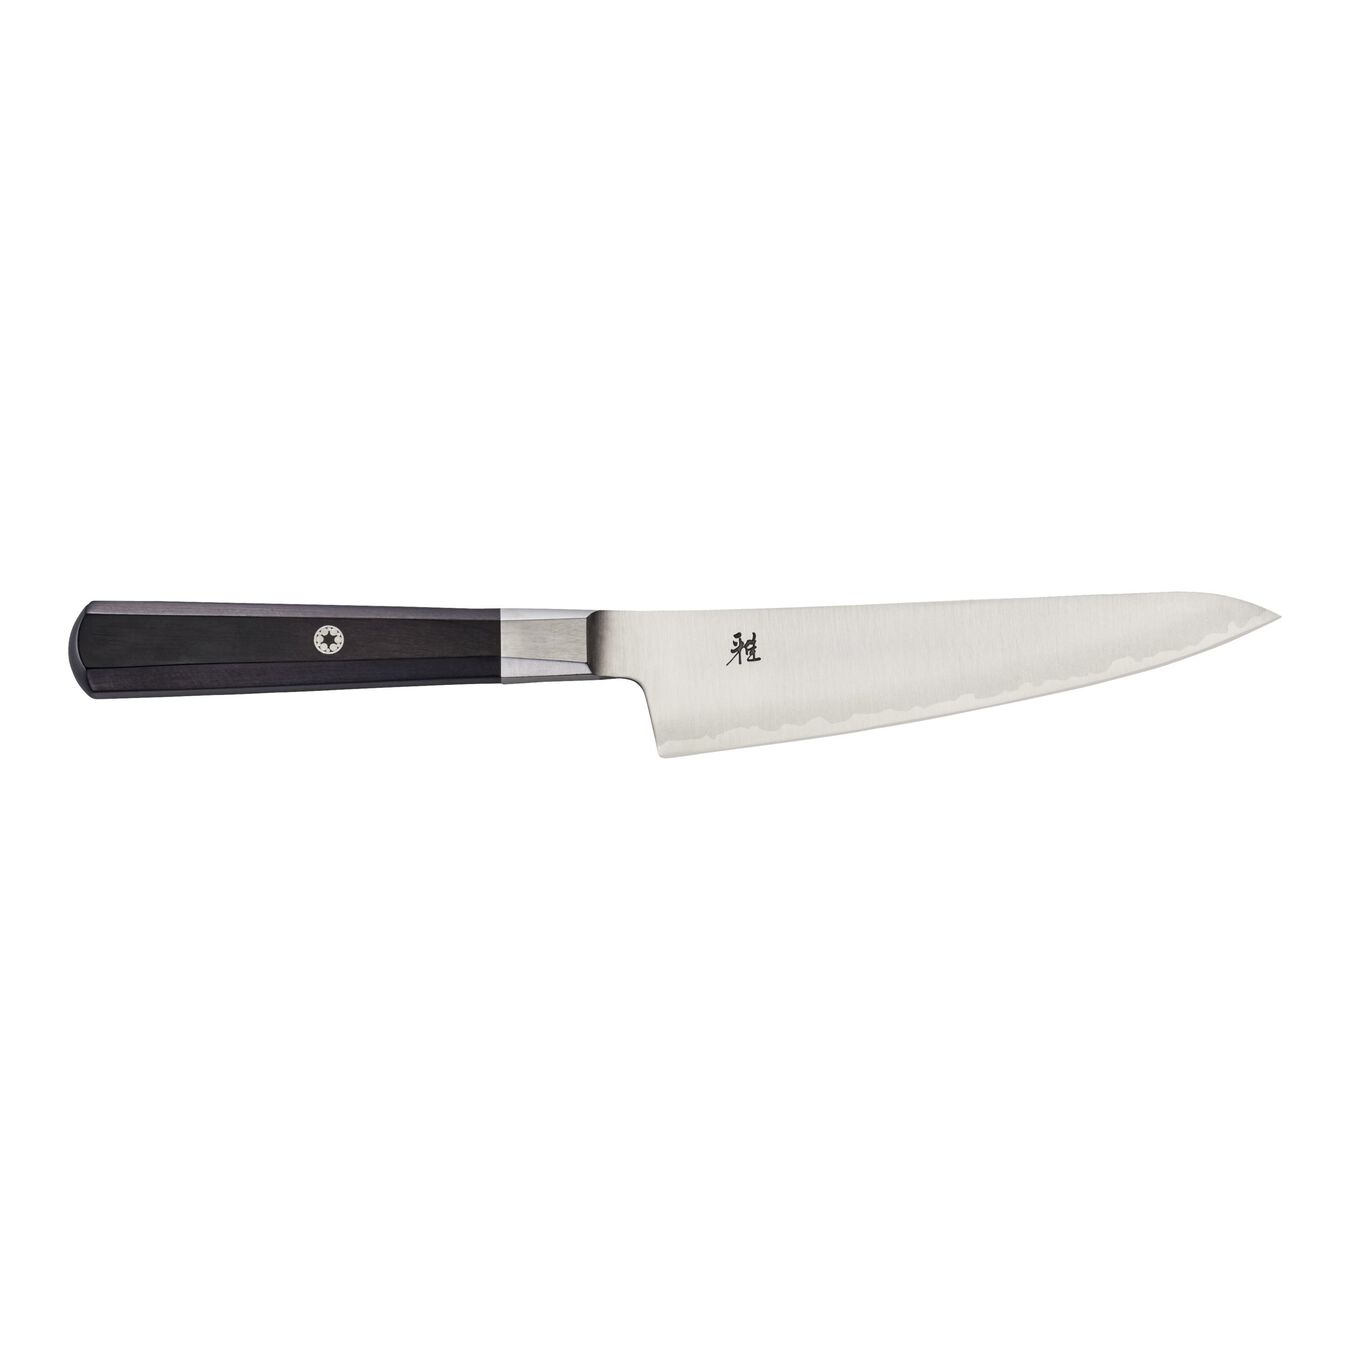 5.5-inch Pakka Wood Prep Knife,,large 1